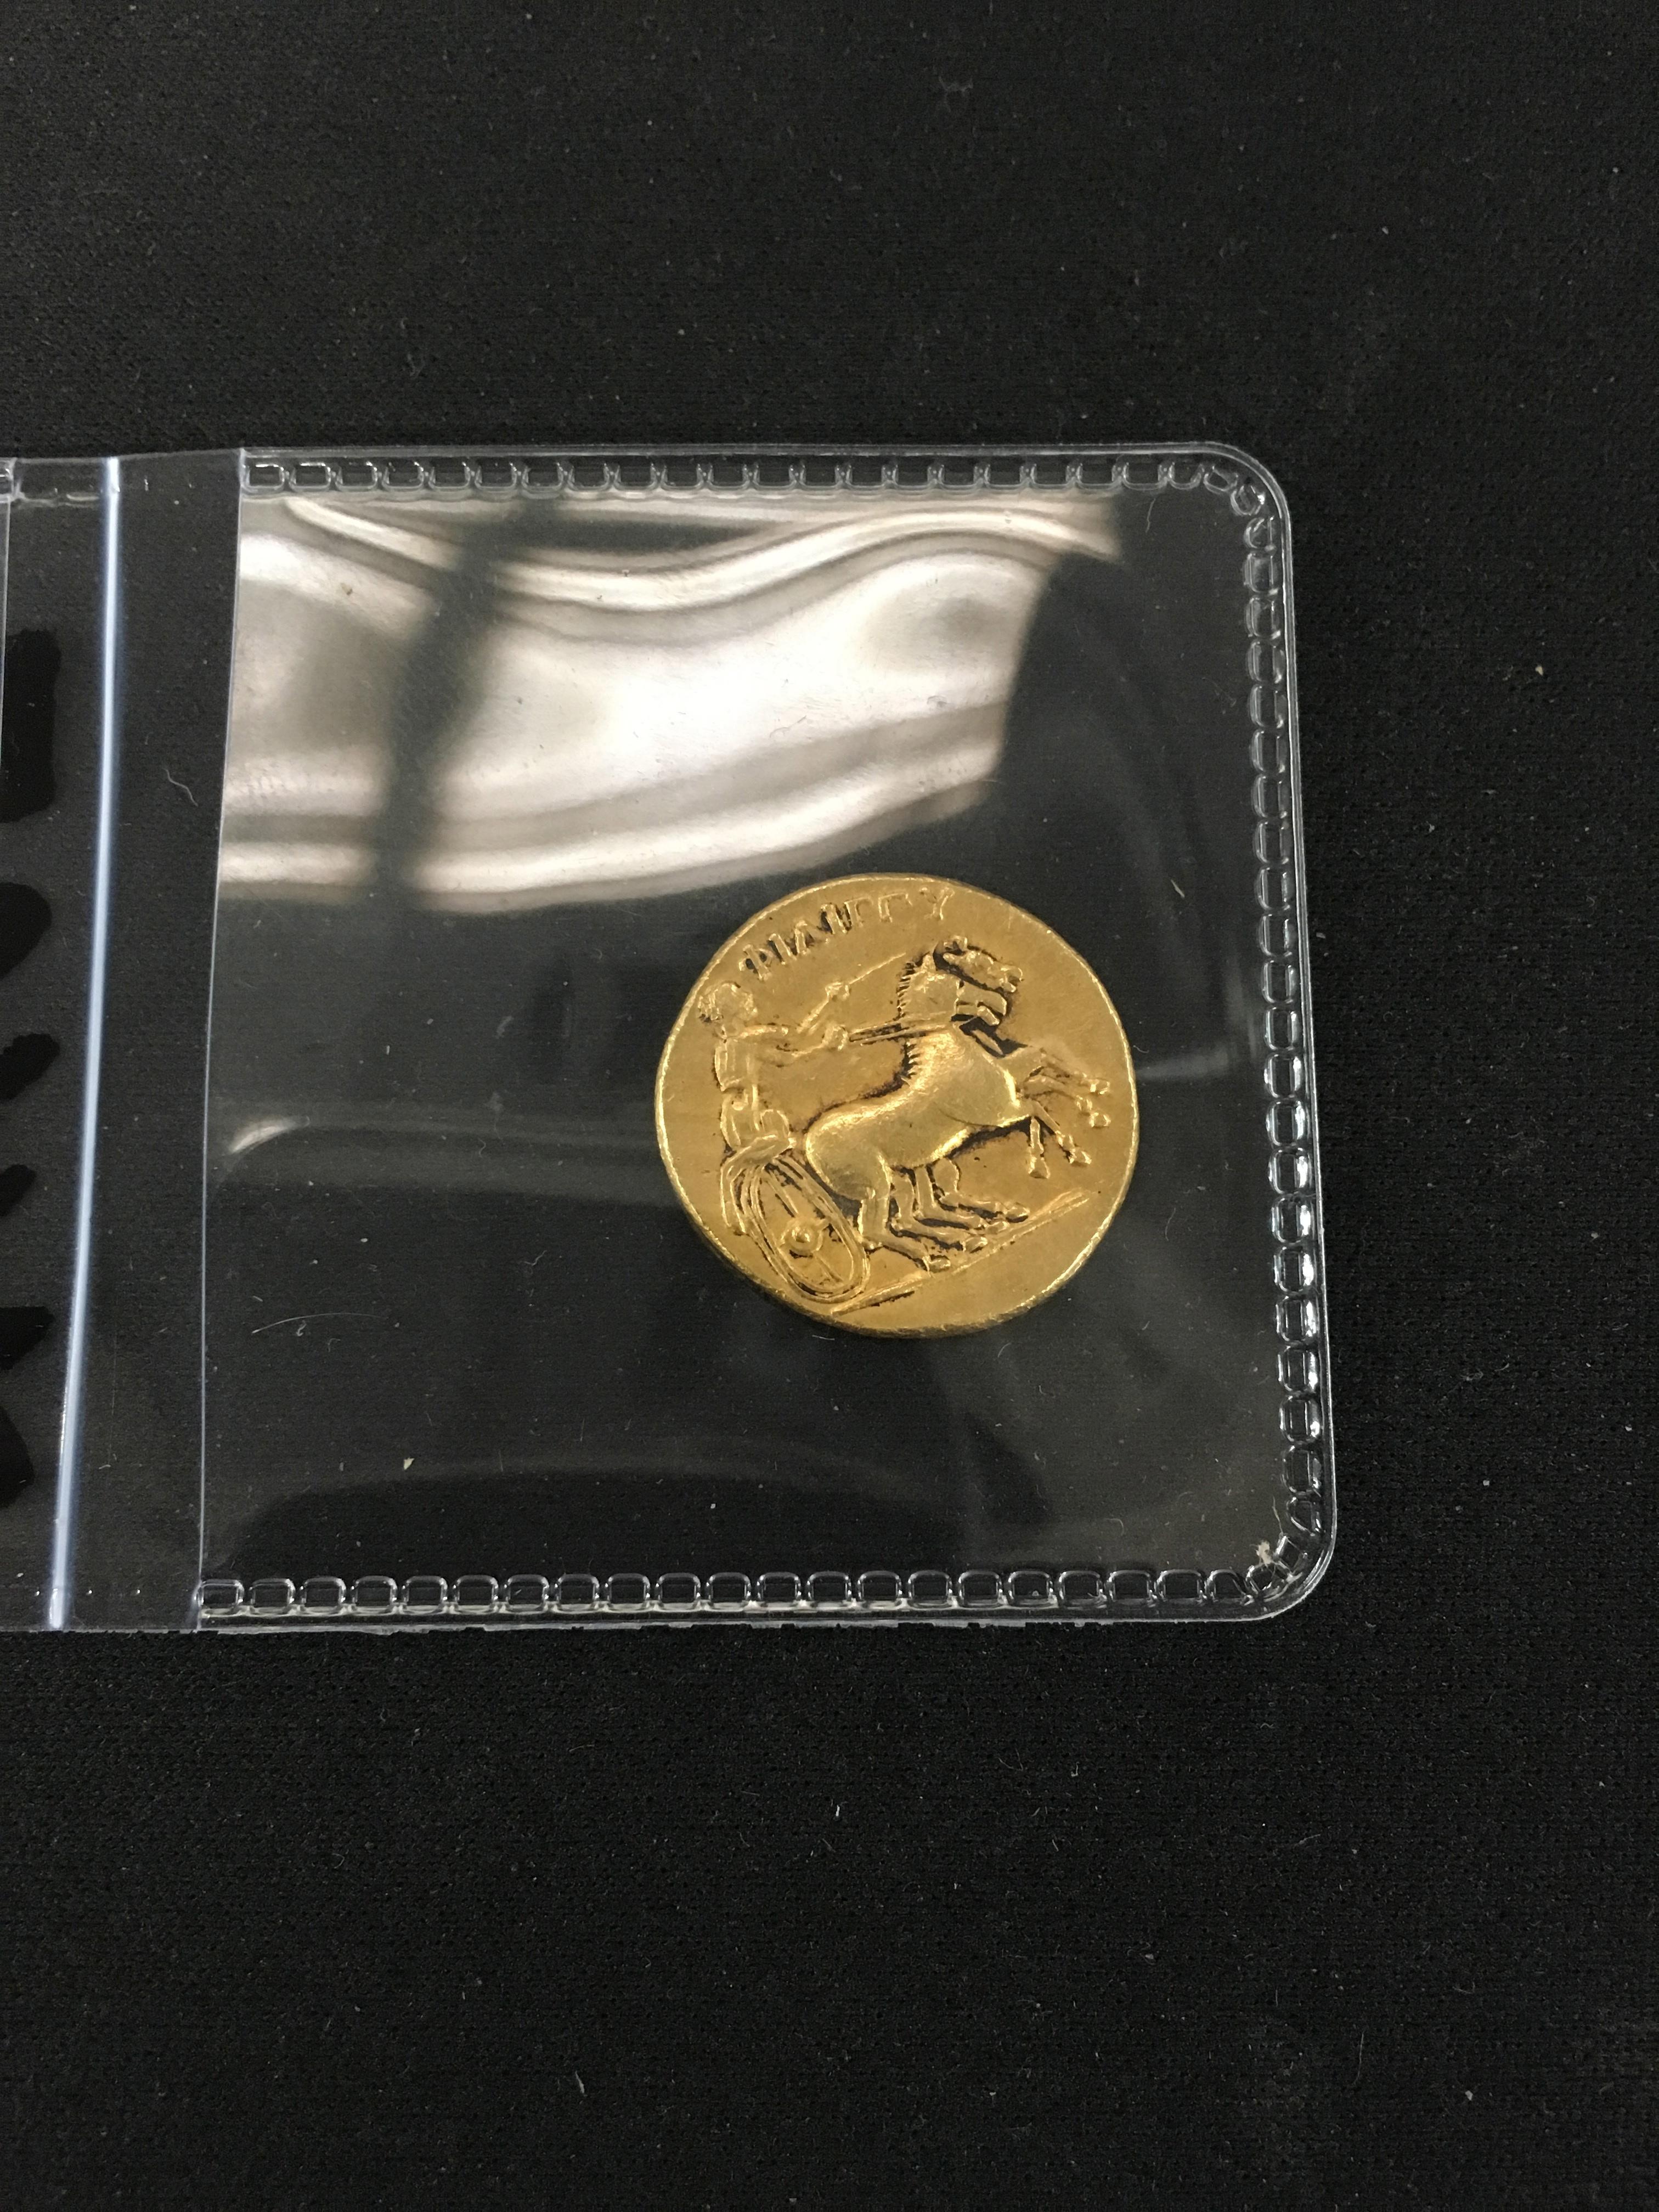 Ancient Greek Gold Coin - Phillip I Gold Stater - 22k Gold - 8.6 grams